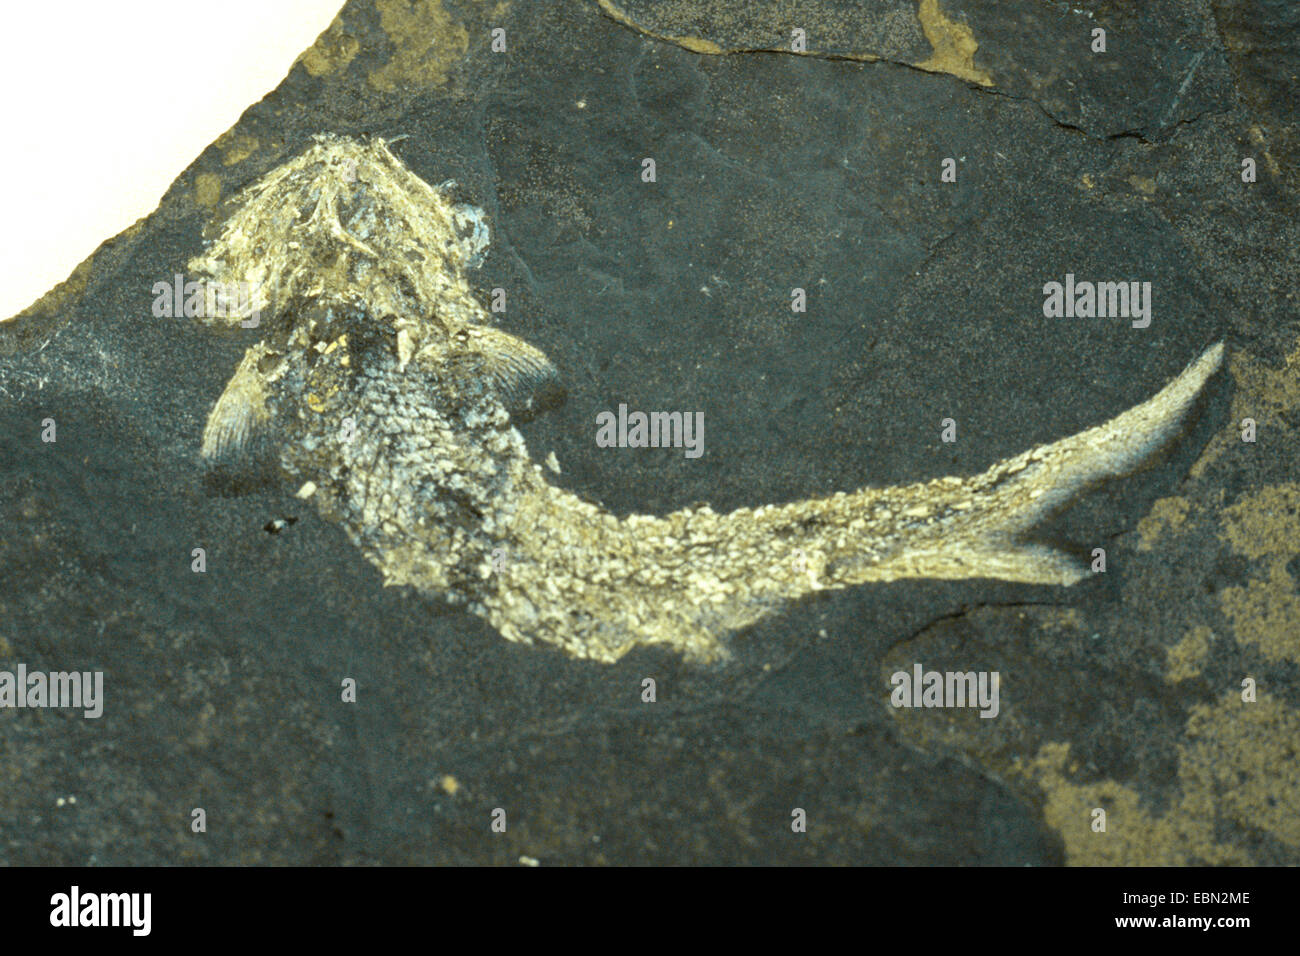 Elonichthys palatinus (Elonichthys palatinus), fossile pesce osseo, in Germania, in Renania Palatinato, Kaulbach Foto Stock